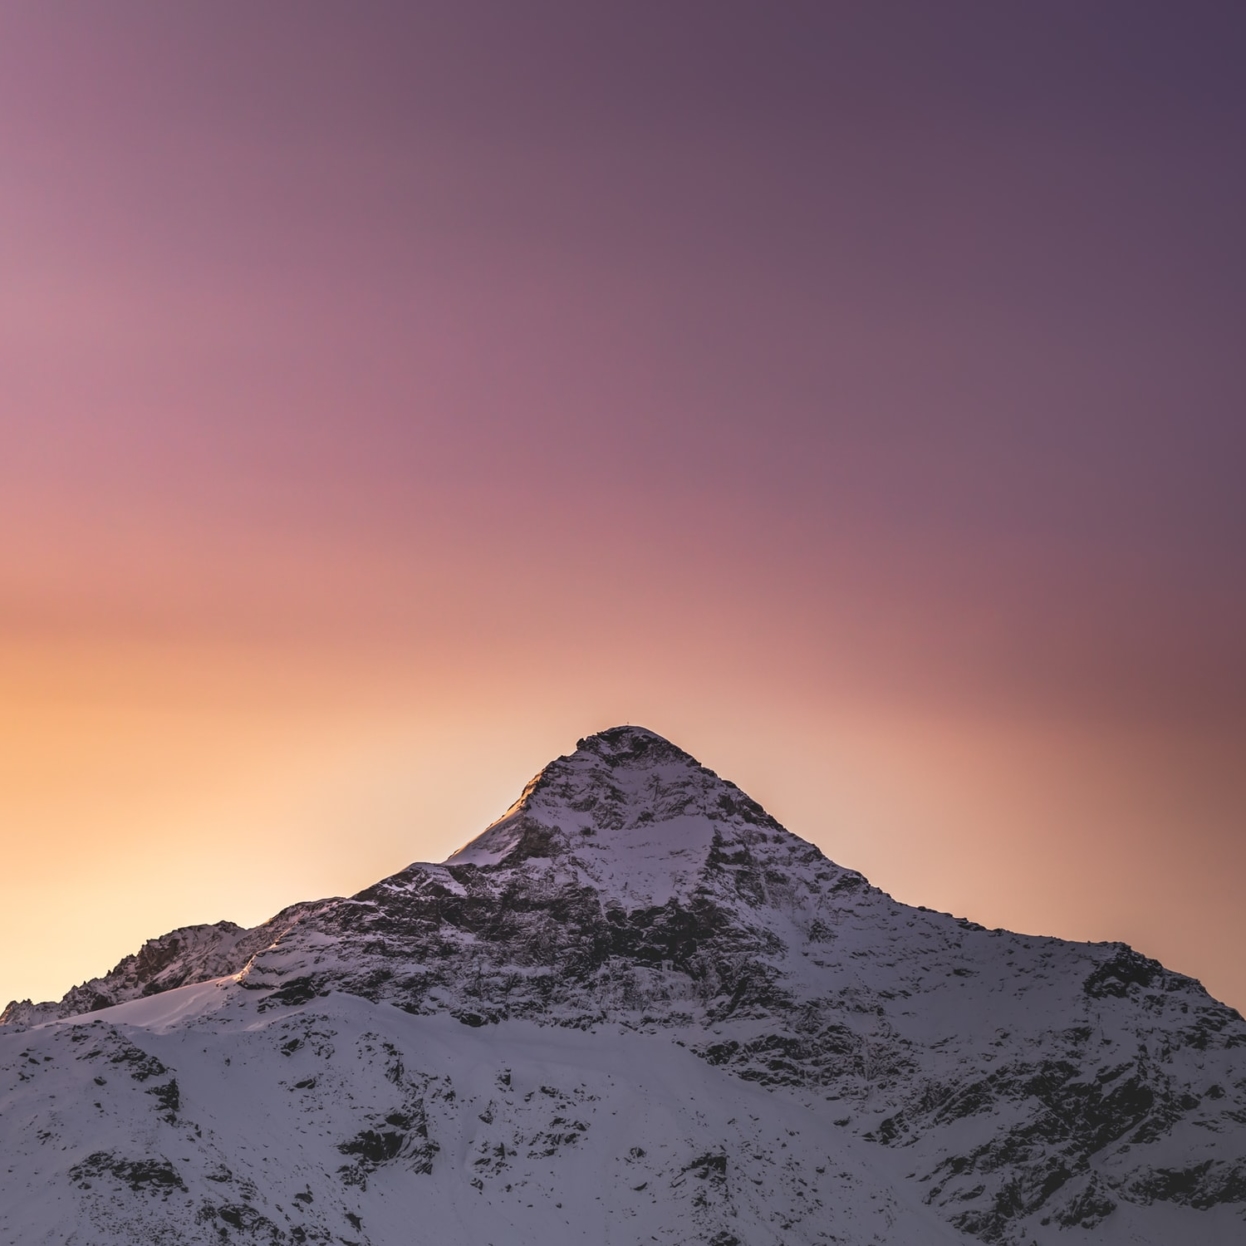 Mountain peak in sunrise